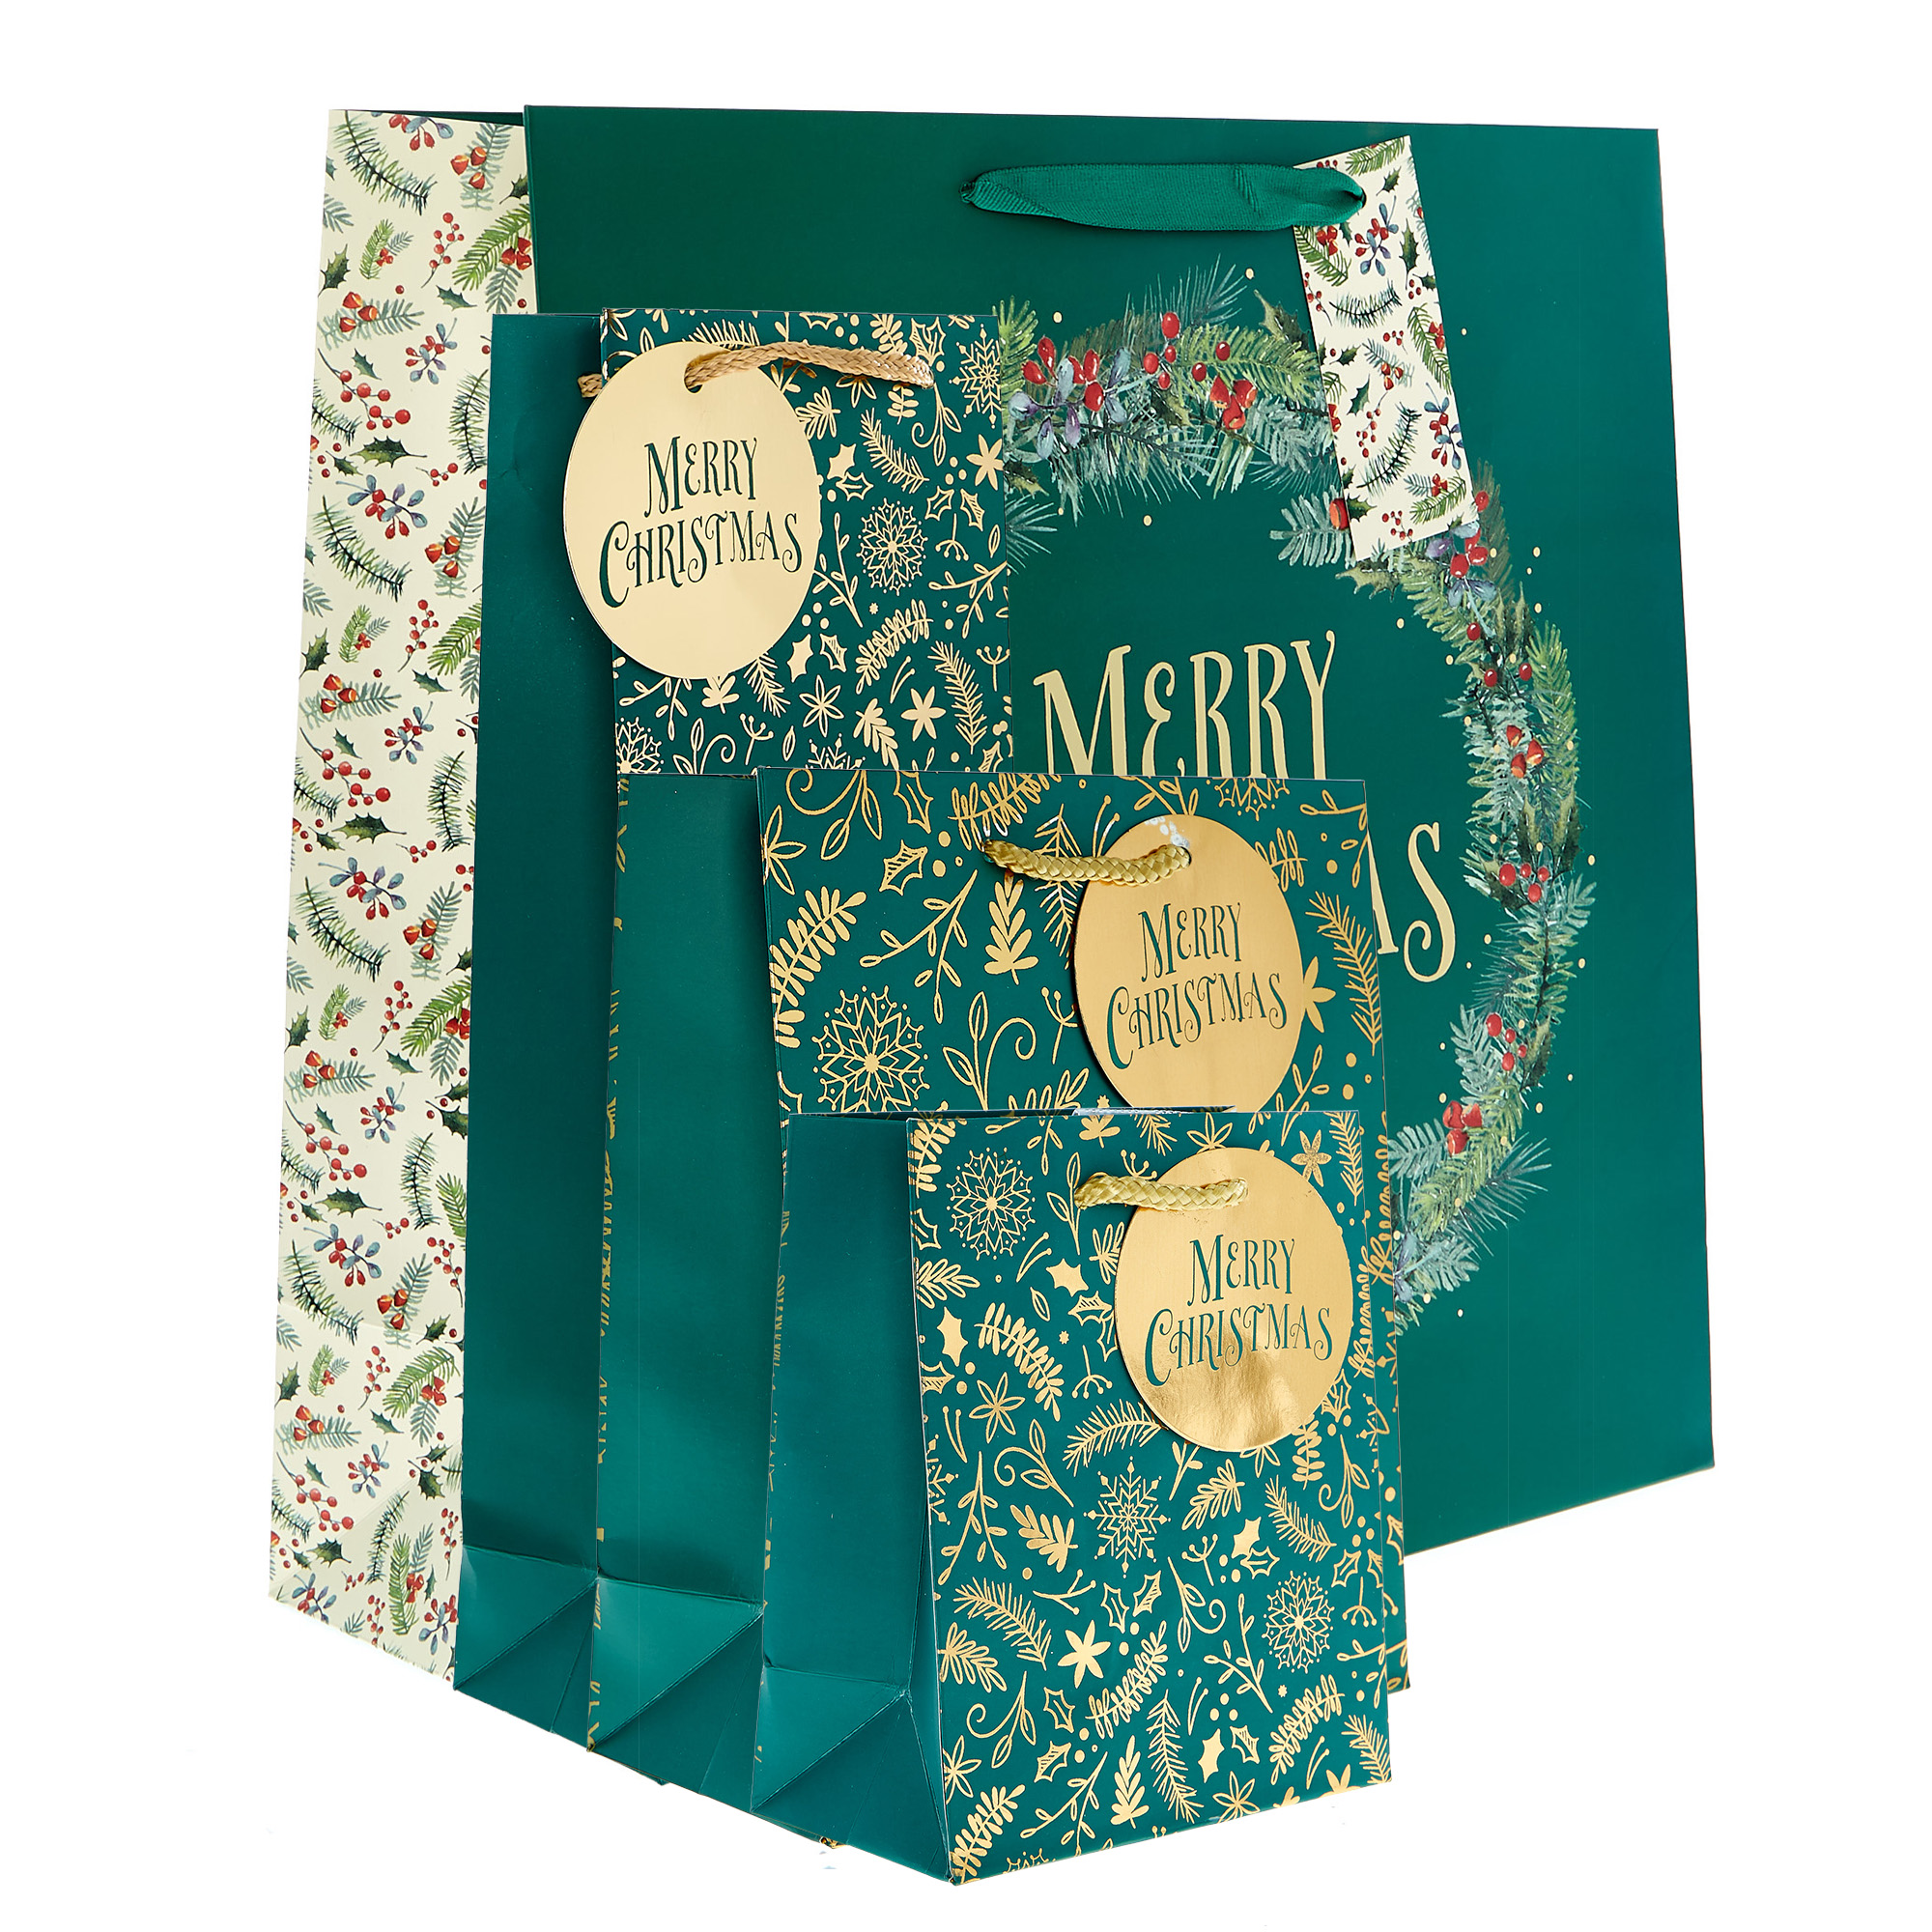 Gold Matte Medium Gift Bag 1ct  Gift Wrap & Packaging Party